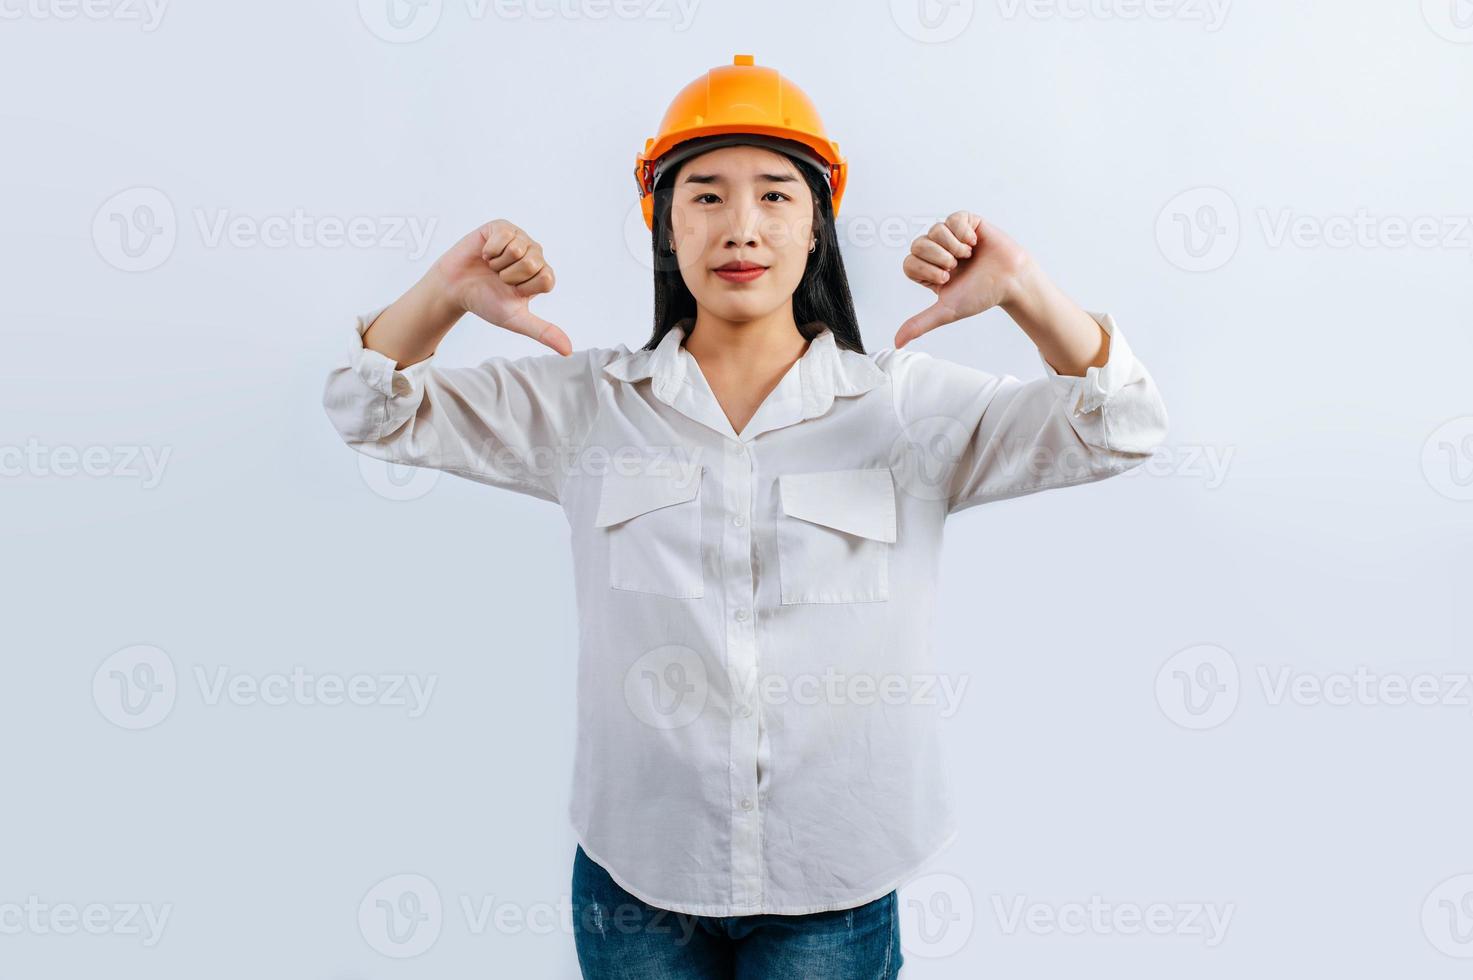 joven hembra ingeniero en casco estar con pulgar arriba postura foto